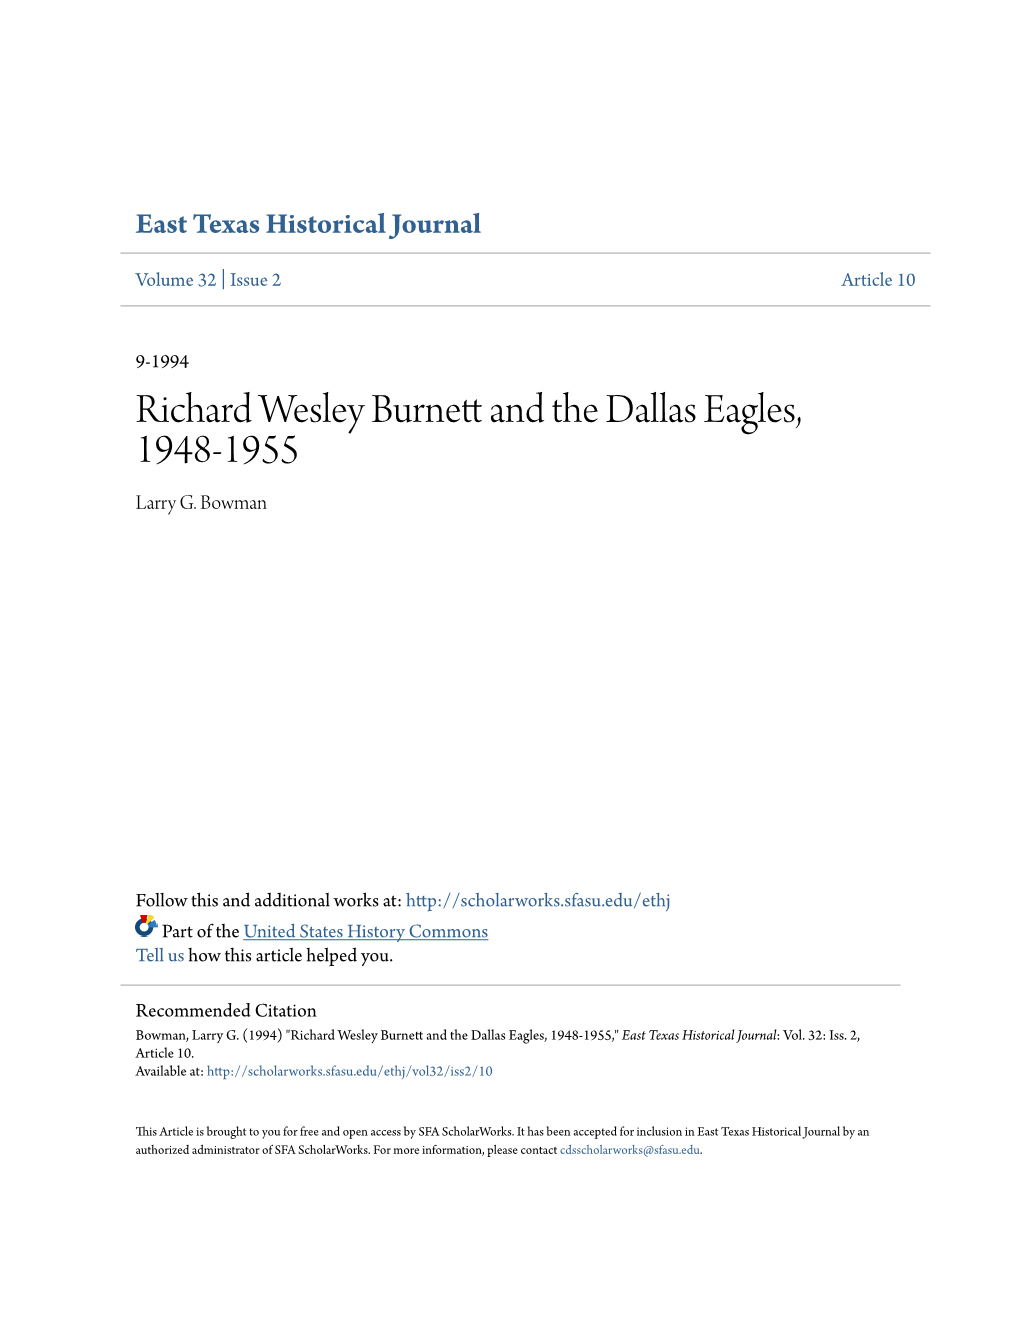 Richard Wesley Burnett and the Dallas Eagles, 1948-1955